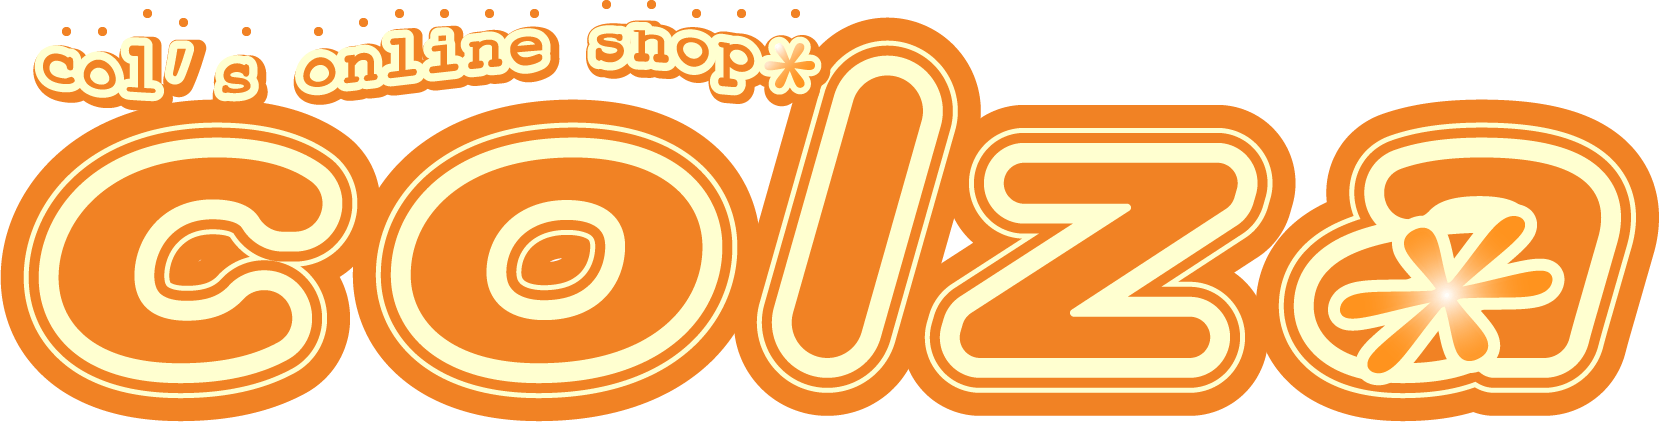 colza　col's online shop